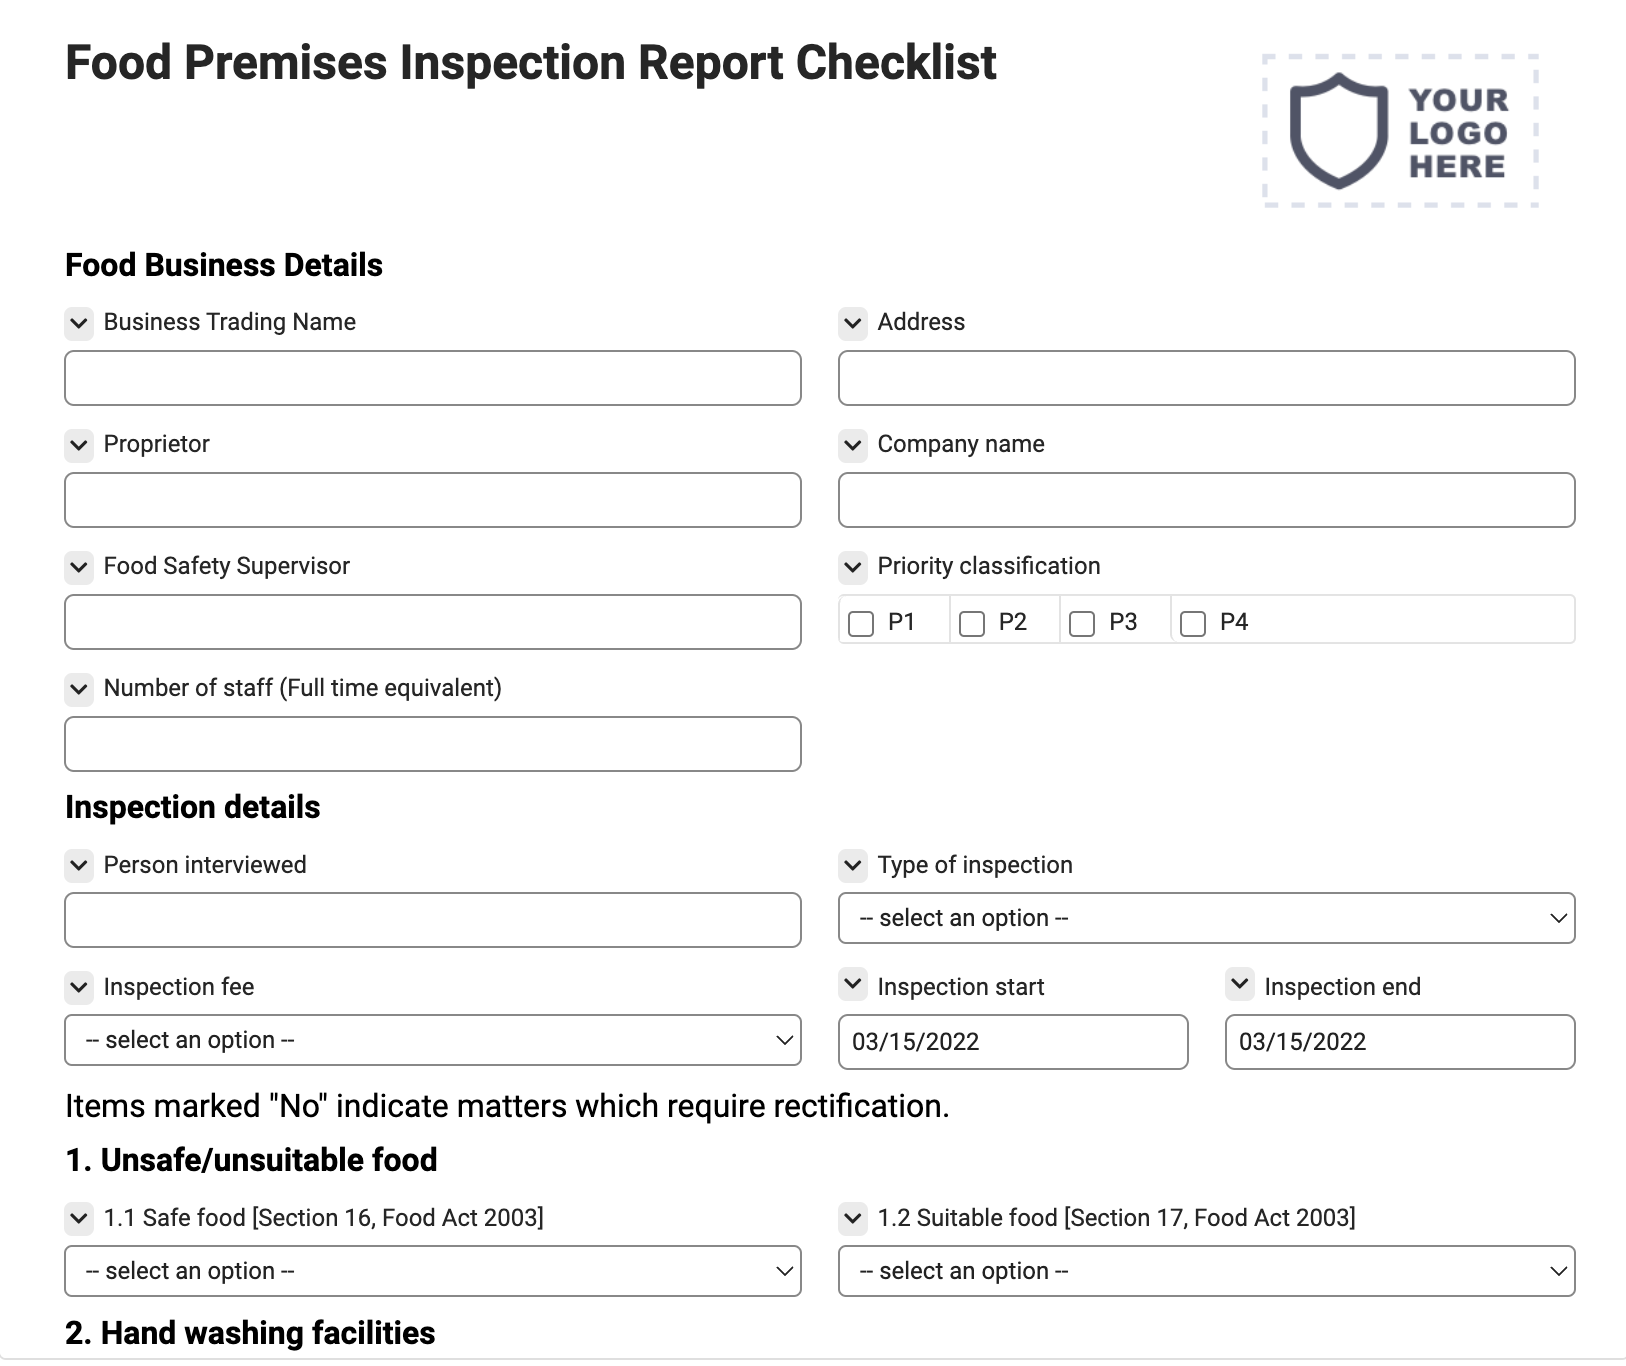 Food Premises Inspection Report Checklist